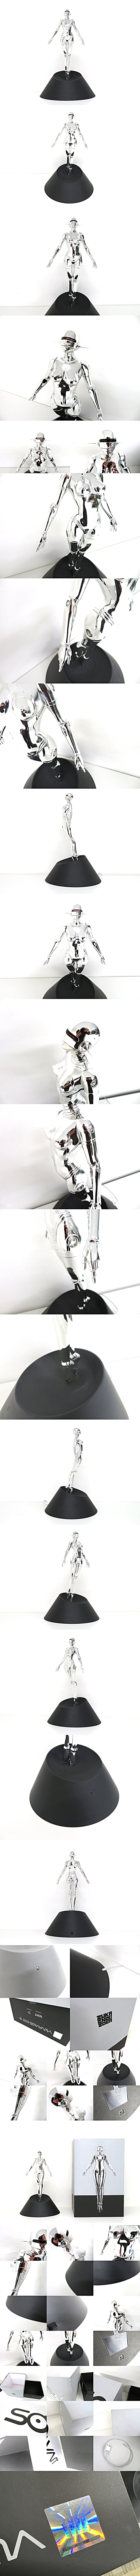 A.P.版　空山基 100体限定 フィギュア Hajime Sorayama Sexy Robot Floating 1/4 scale  セクシーロボット検村上隆草間彌生奈良美智kawas